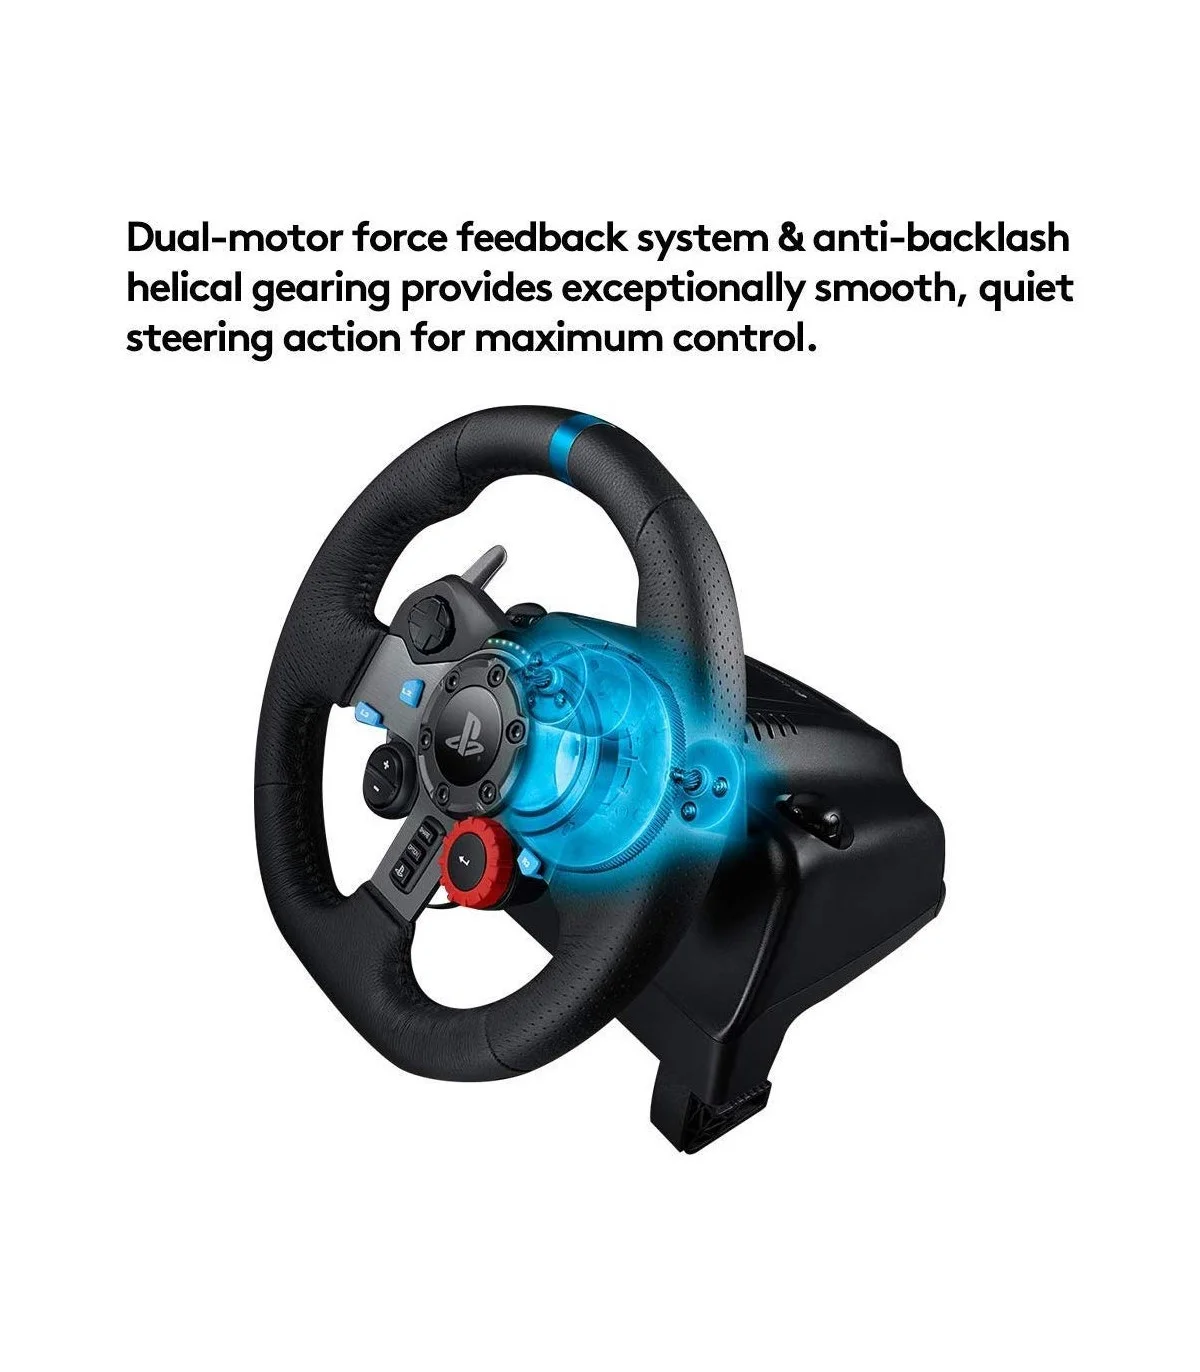 فرمان بازی لاجیتک Logitech G29 Driving Force Racing Wheel